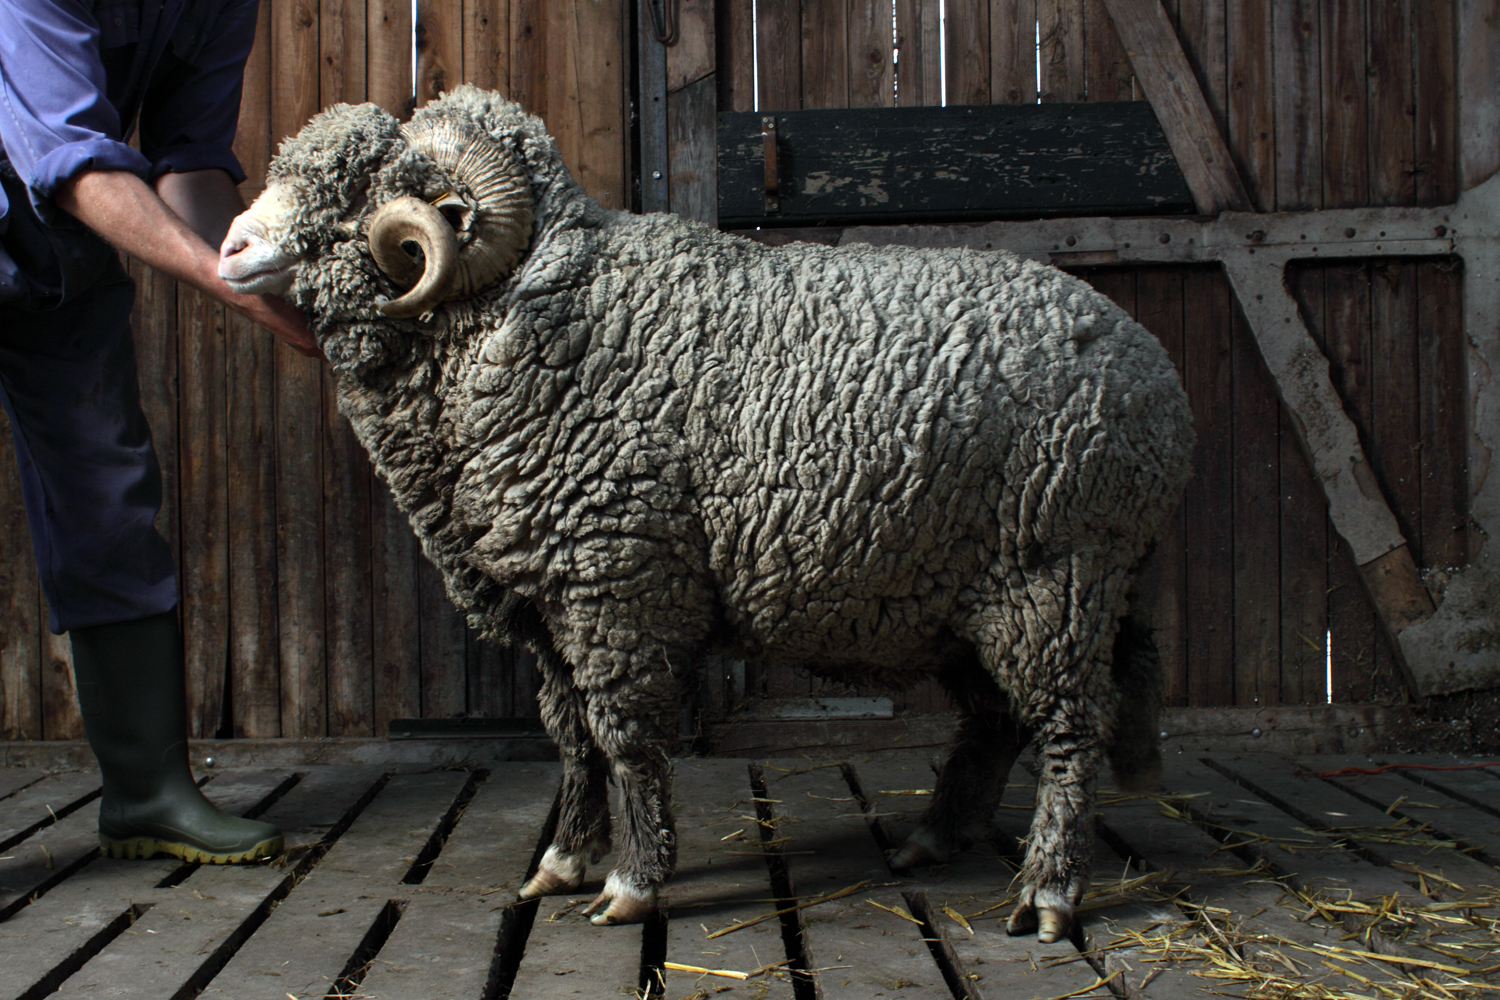 One Sheep Sweater - christienmeindertsma